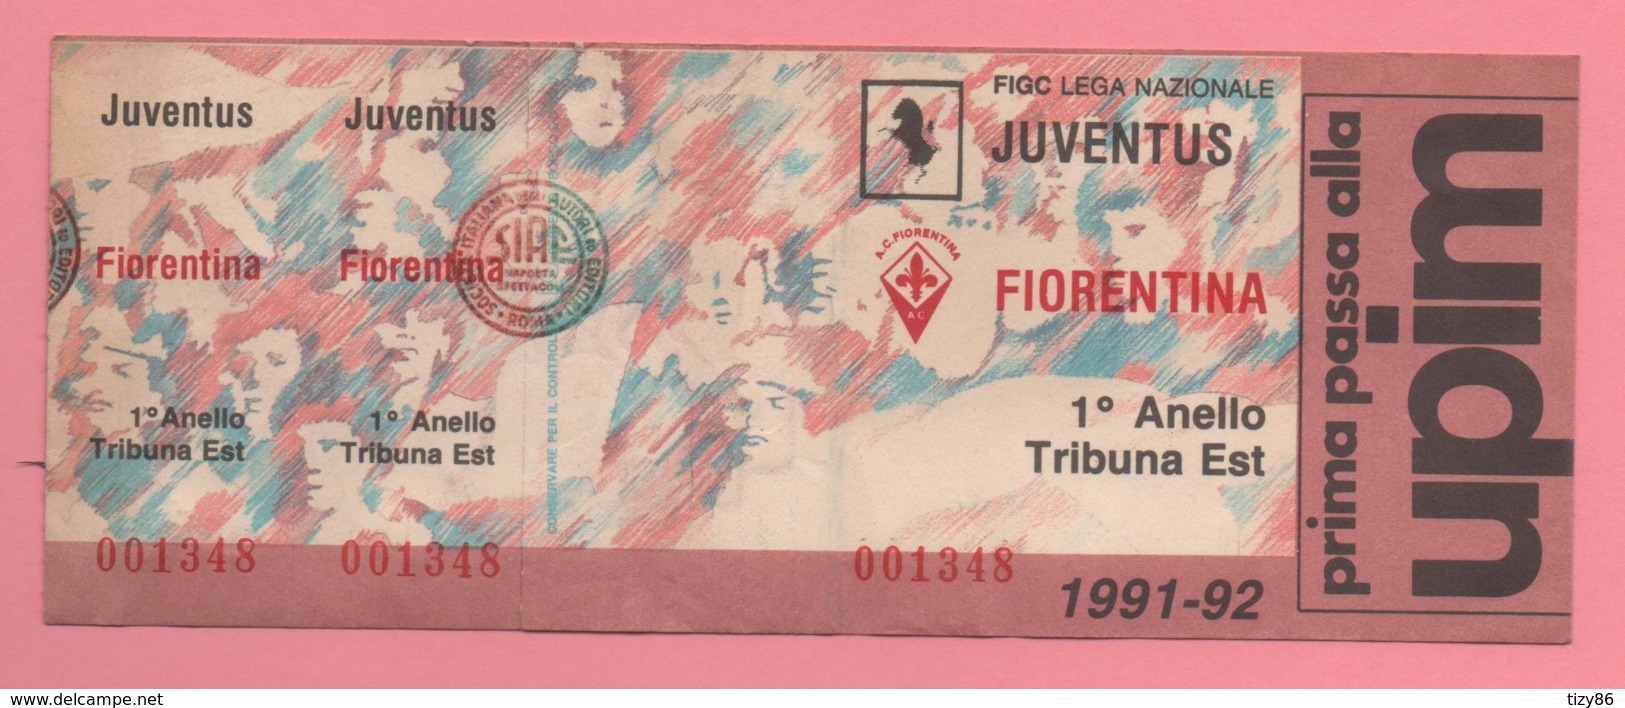 Biglietto D'ingresso Stadio Juventus Fiorentina 1991-92 - Toegangskaarten